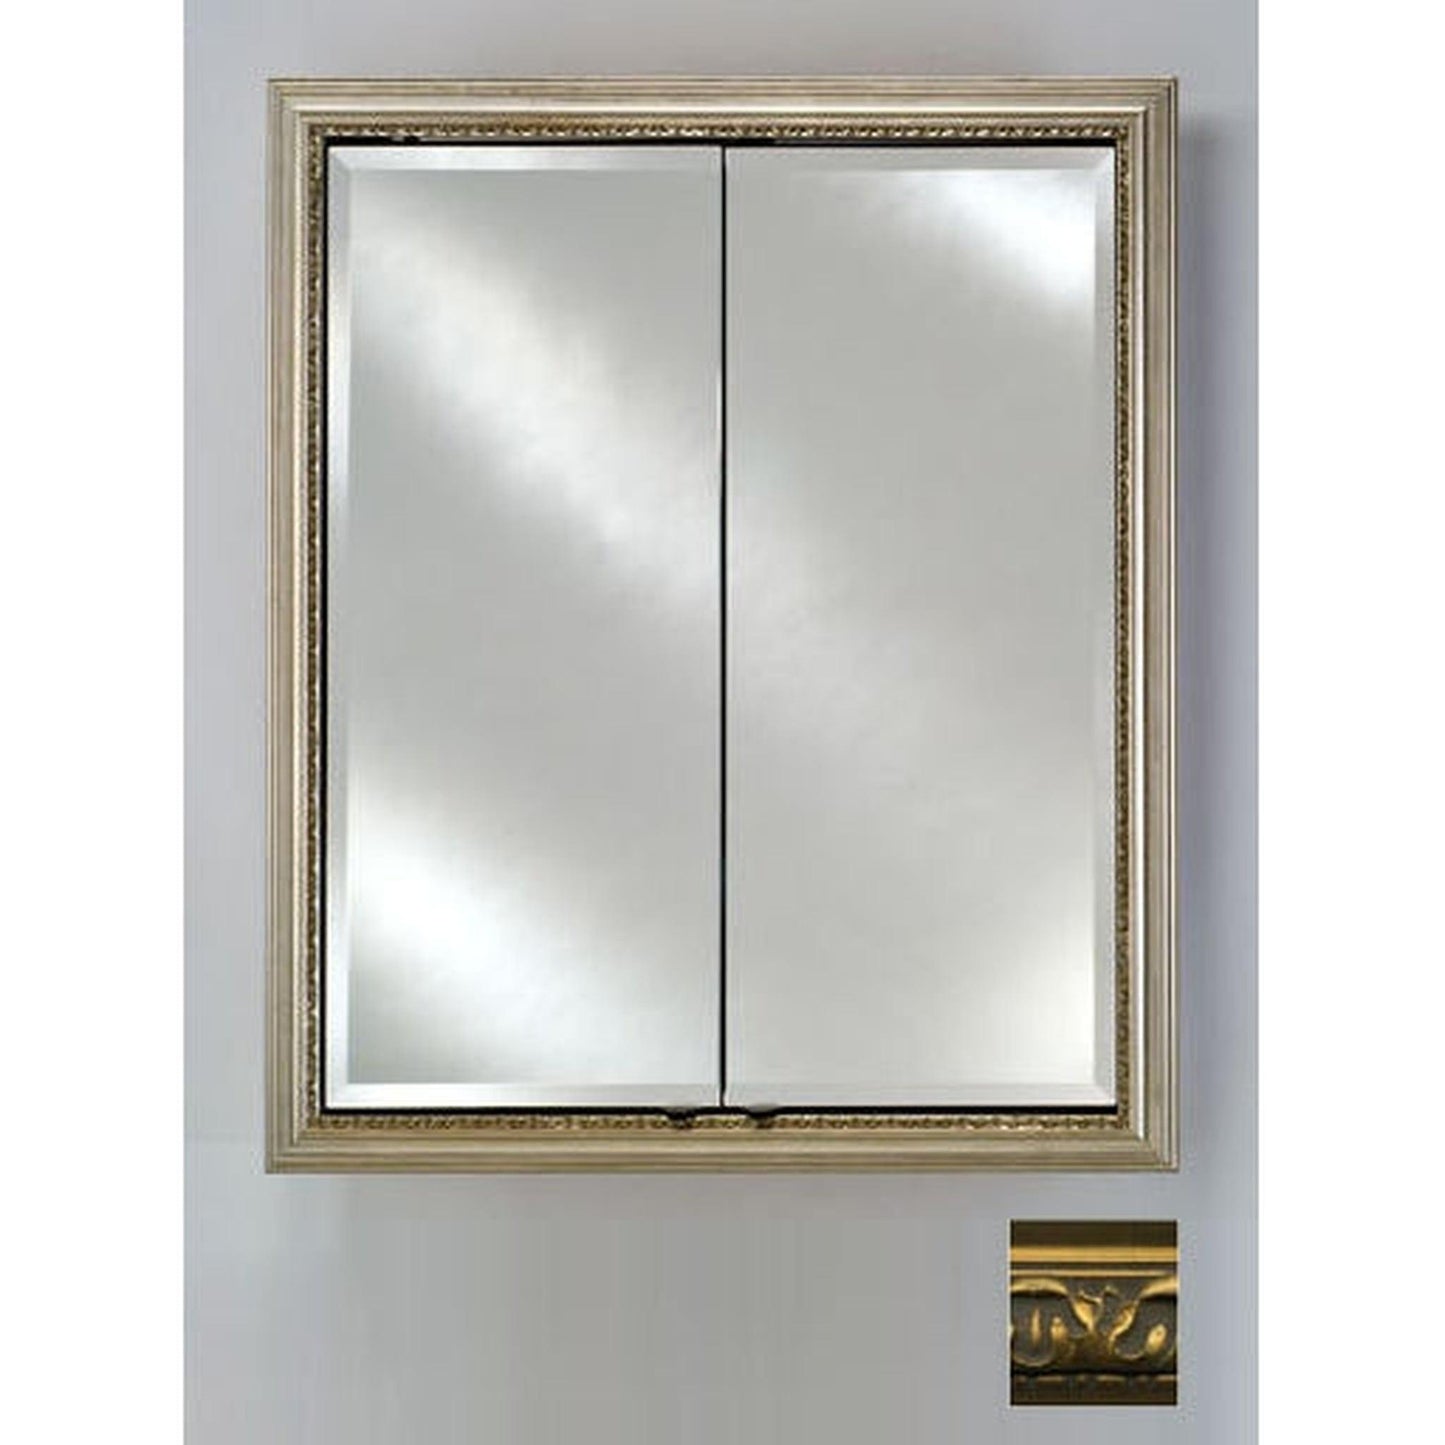 Afina Signature 24" x 30" Valencia Antique Gold Recessed Double Door Medicine Cabinet With Beveled Edge Mirror